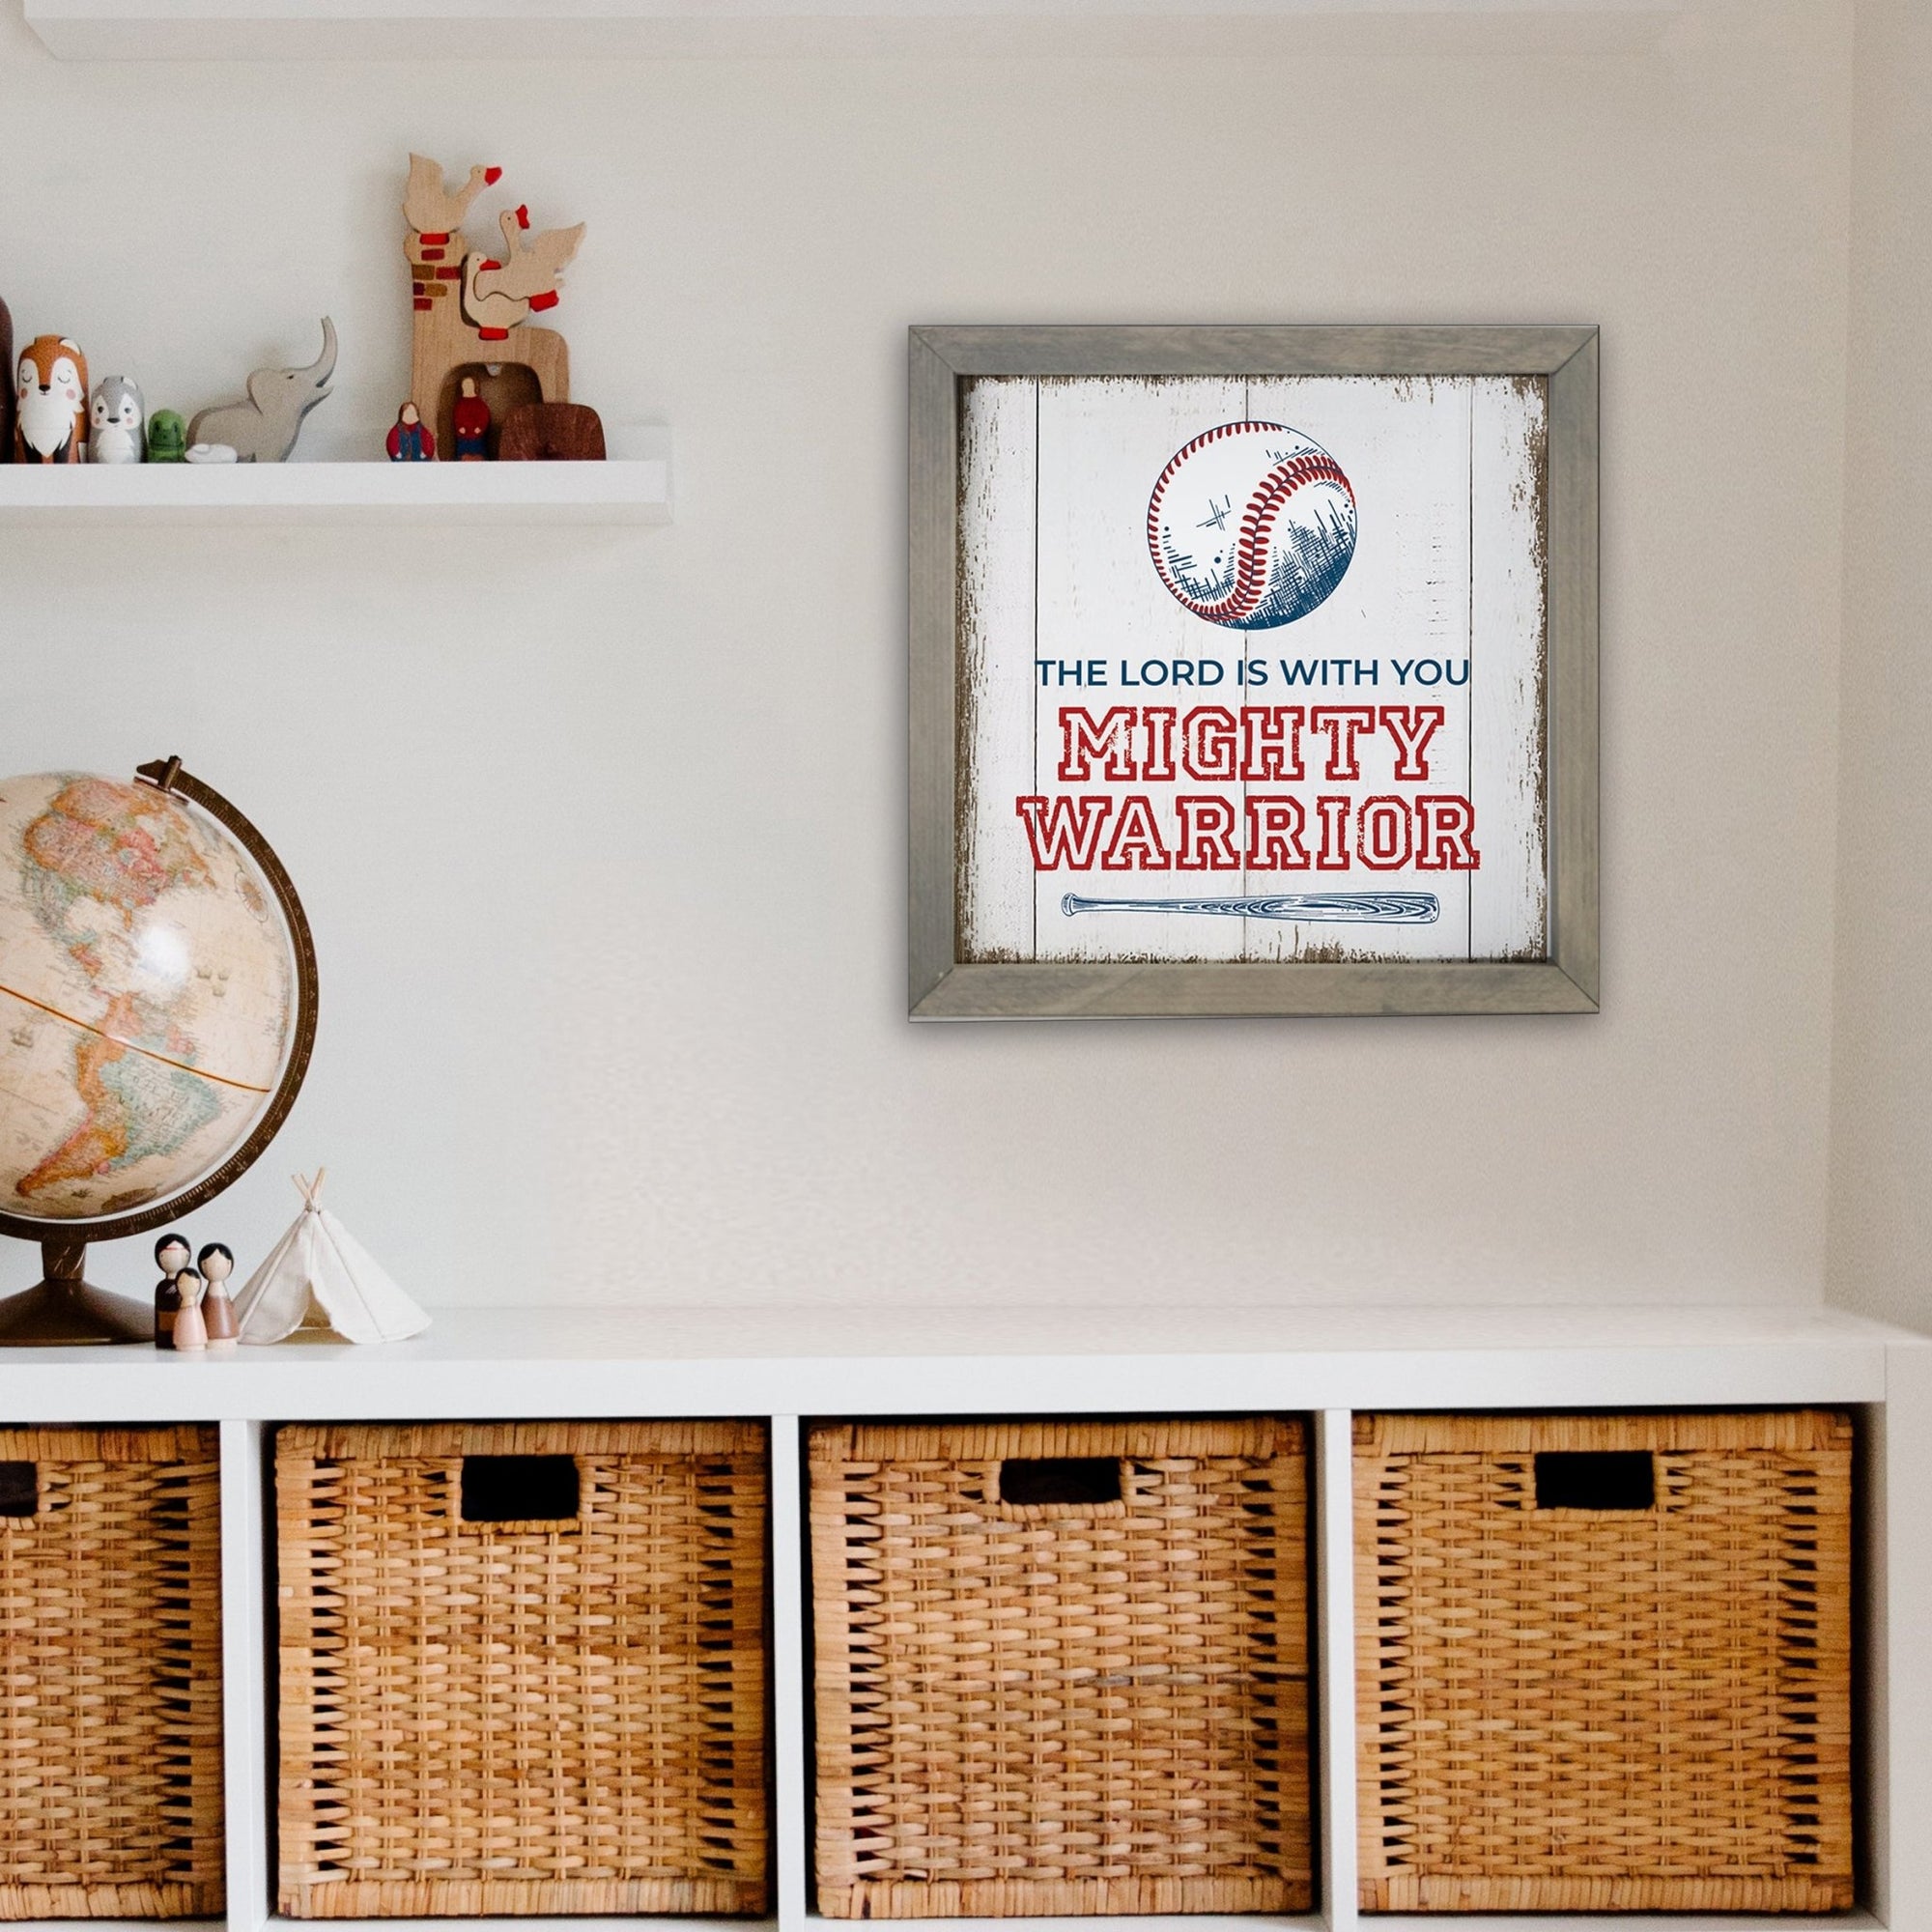 Elegant Baseball Framed Shadow Box Shelf Décor With Inspiring Bible Verses - Mighty Warrior 2 - LifeSong Milestones